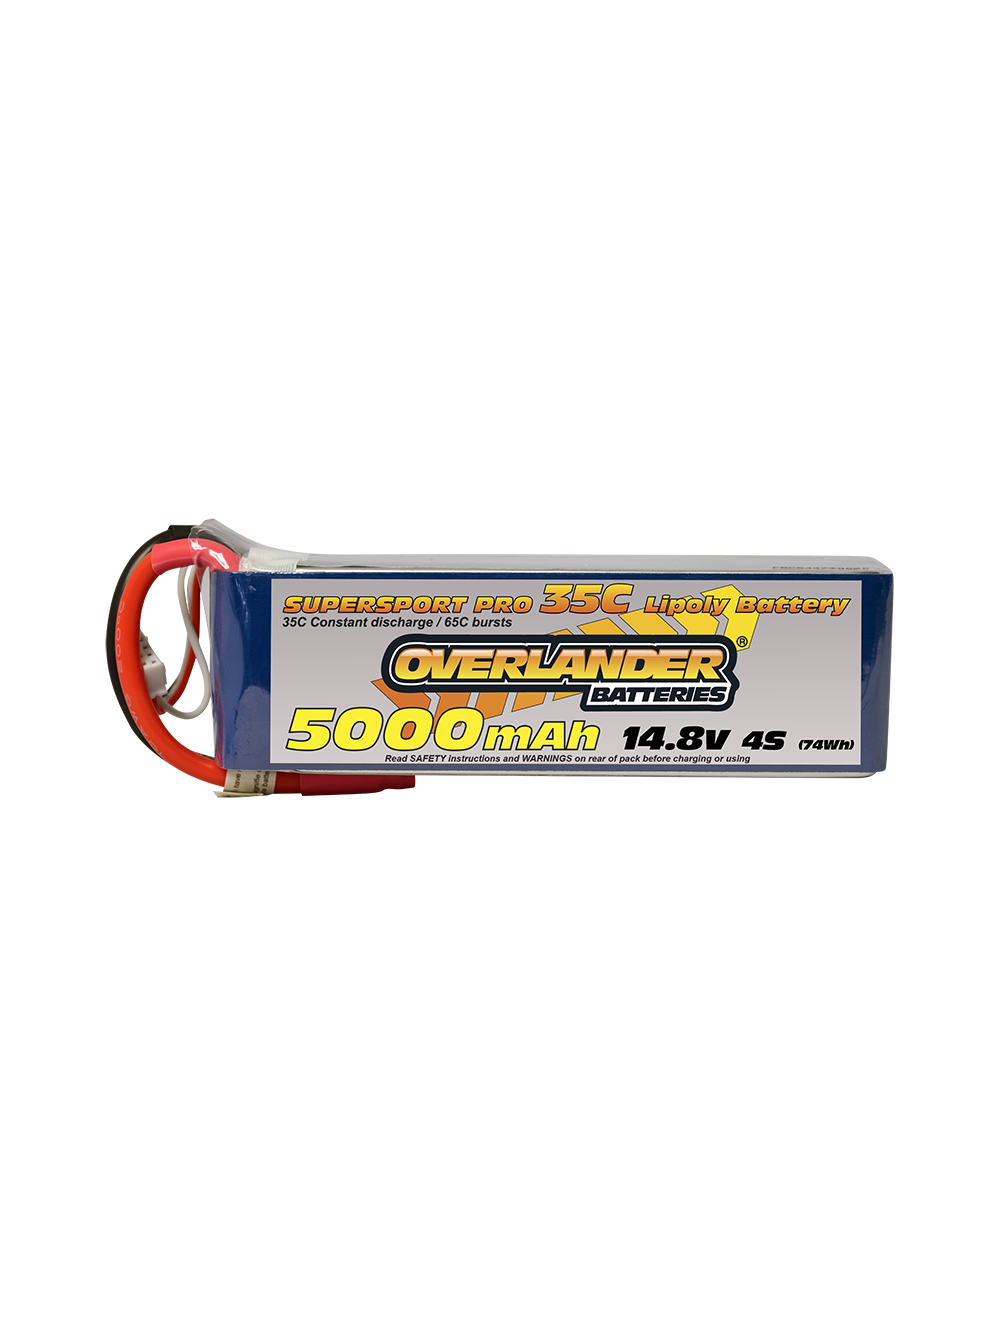 Overlander 5000MAH 14.8V 4S 35C SUPERSPORT PRO LIPO BATTERY